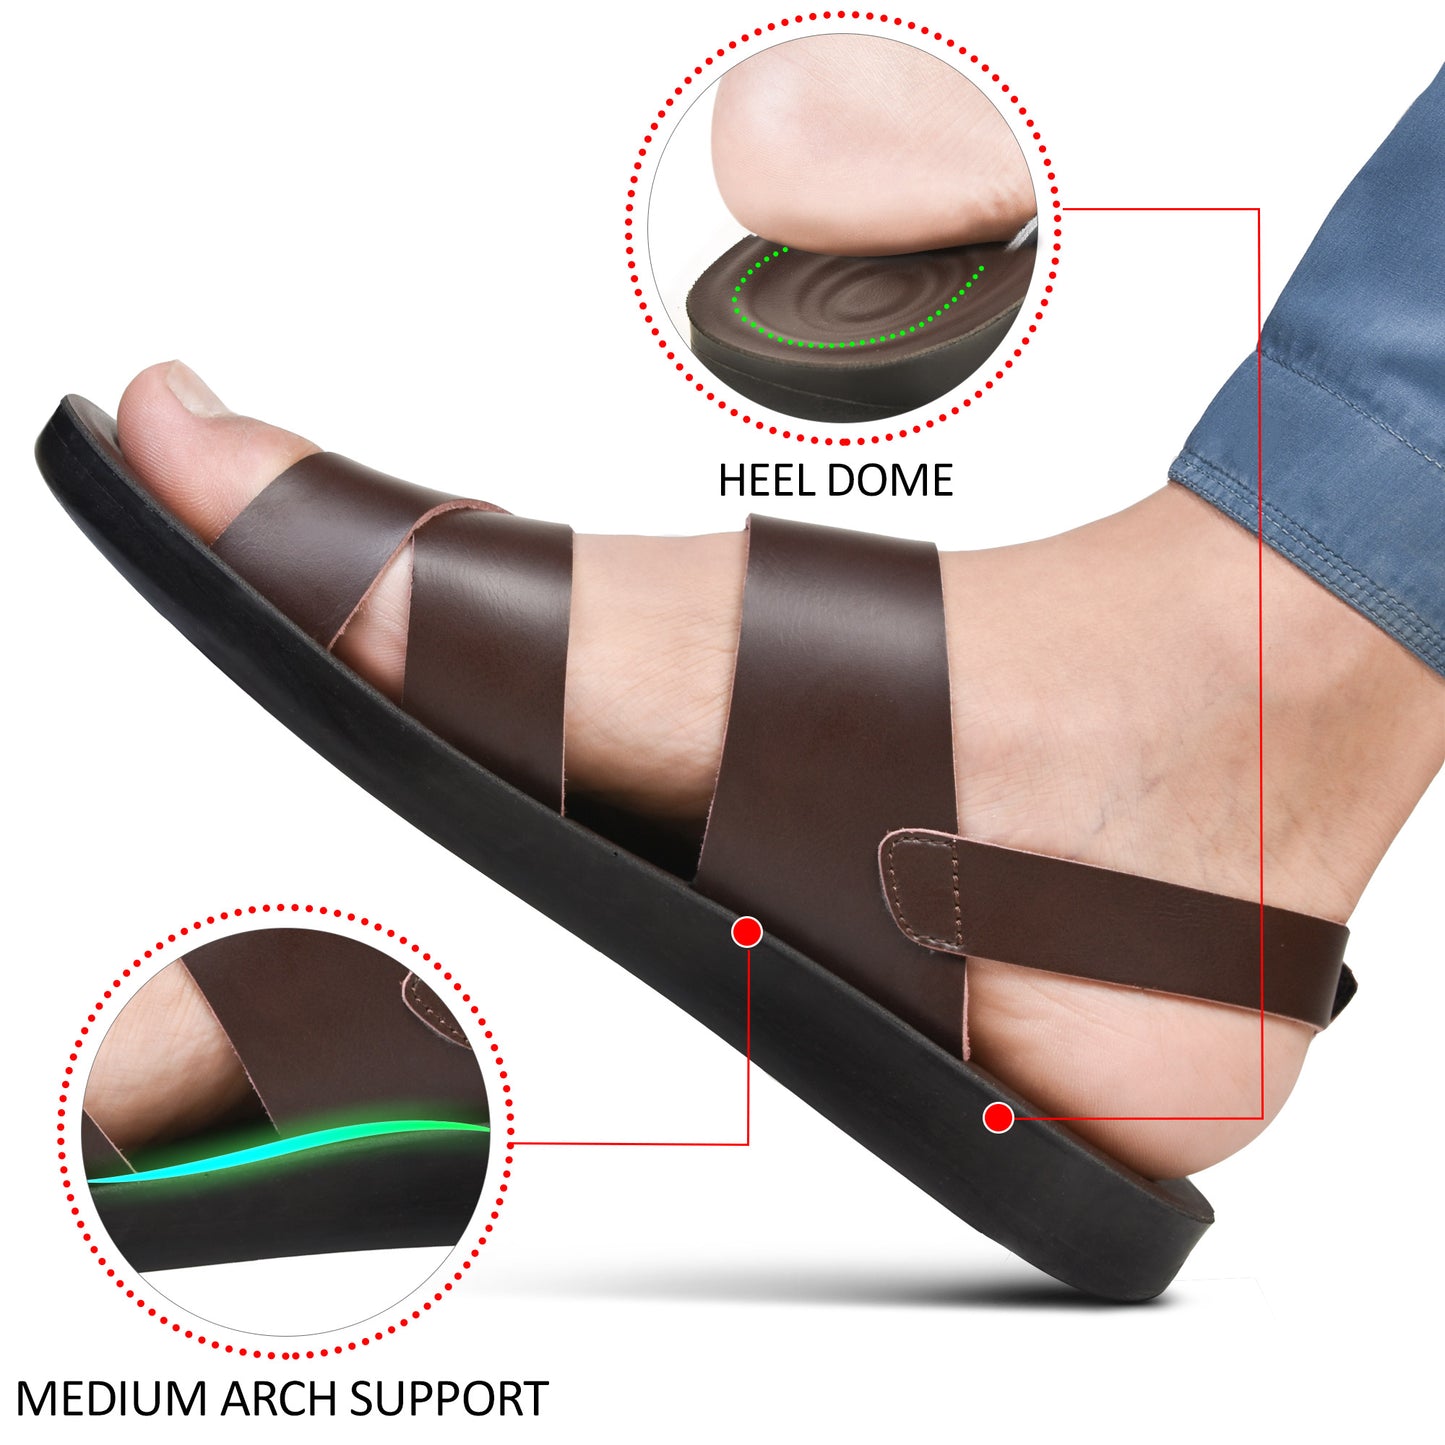 AEROTHOTIC Hemlock Men’s Adjustable Ankle Strap Sandals – Original Thailand Imported – M1311